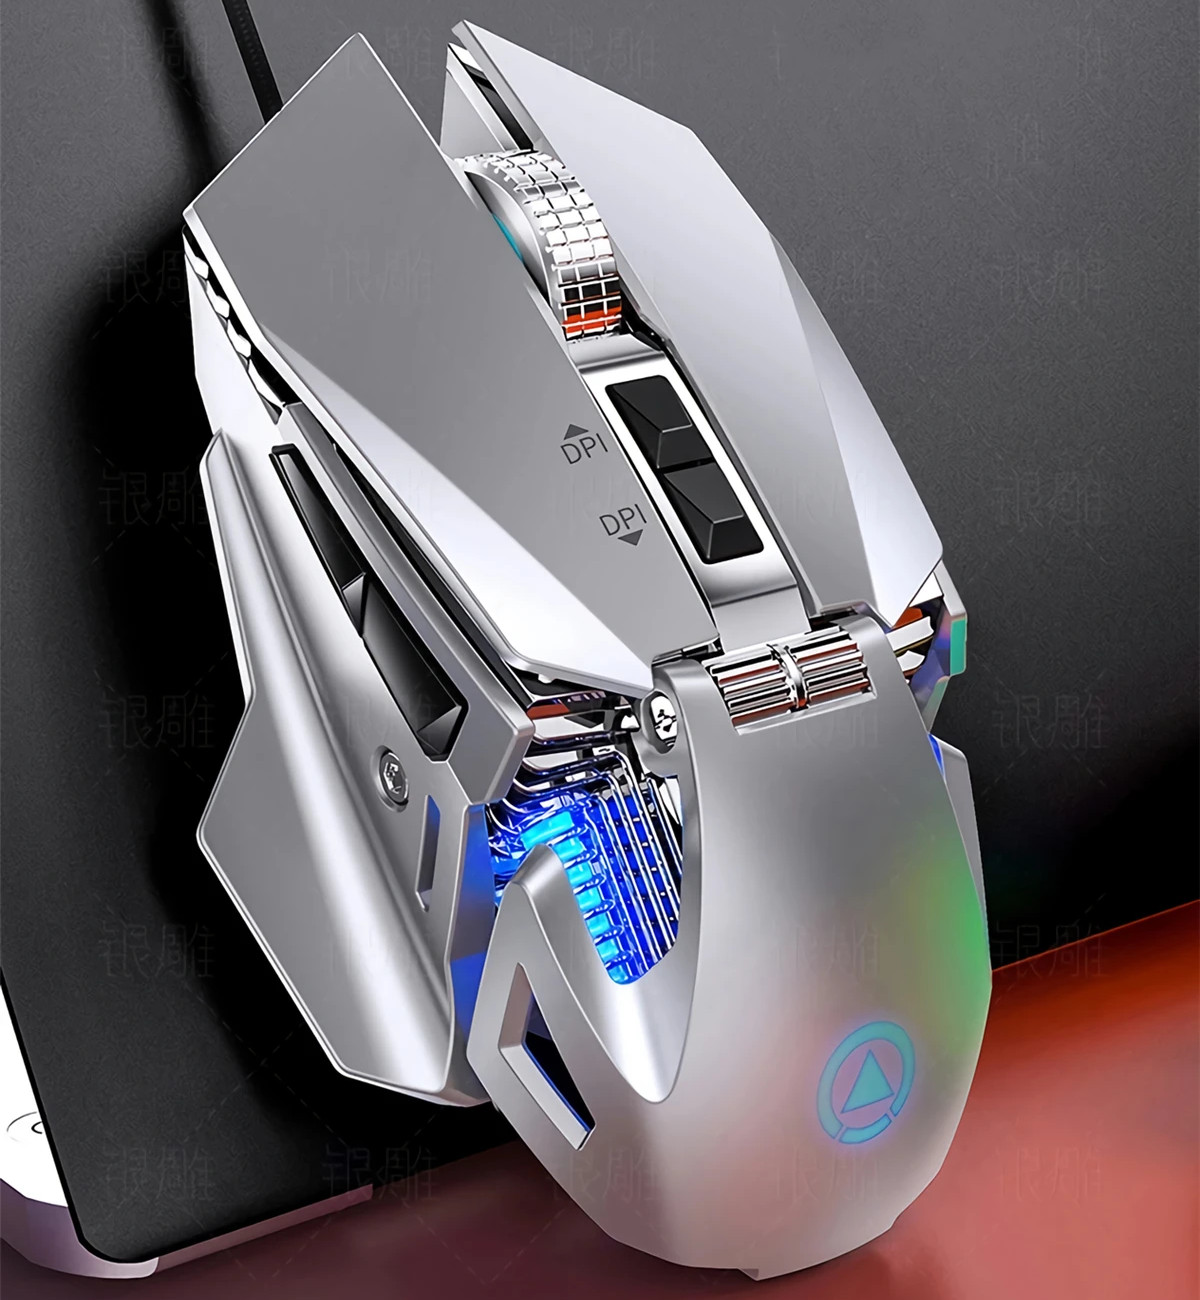 YINDIAO ゲーミングマウス G10 － この「いかついマウス」、いくらだと思います？